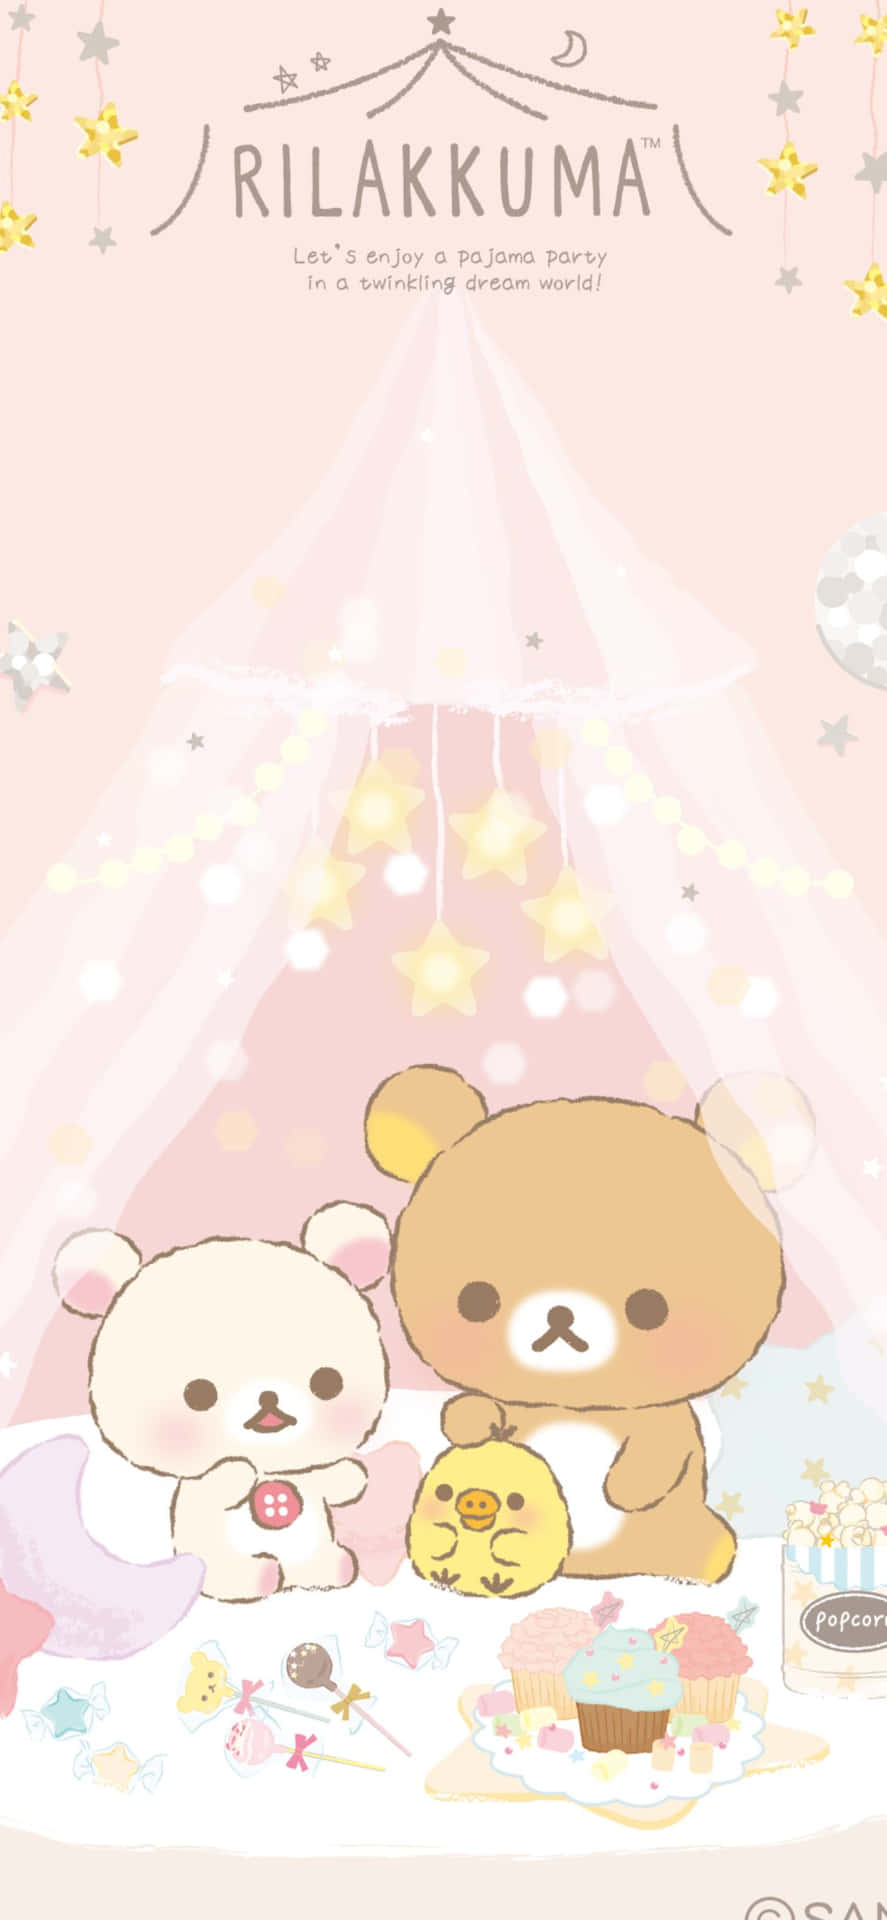 Relax with Rilakkuma - Adorable Bear-themed Background